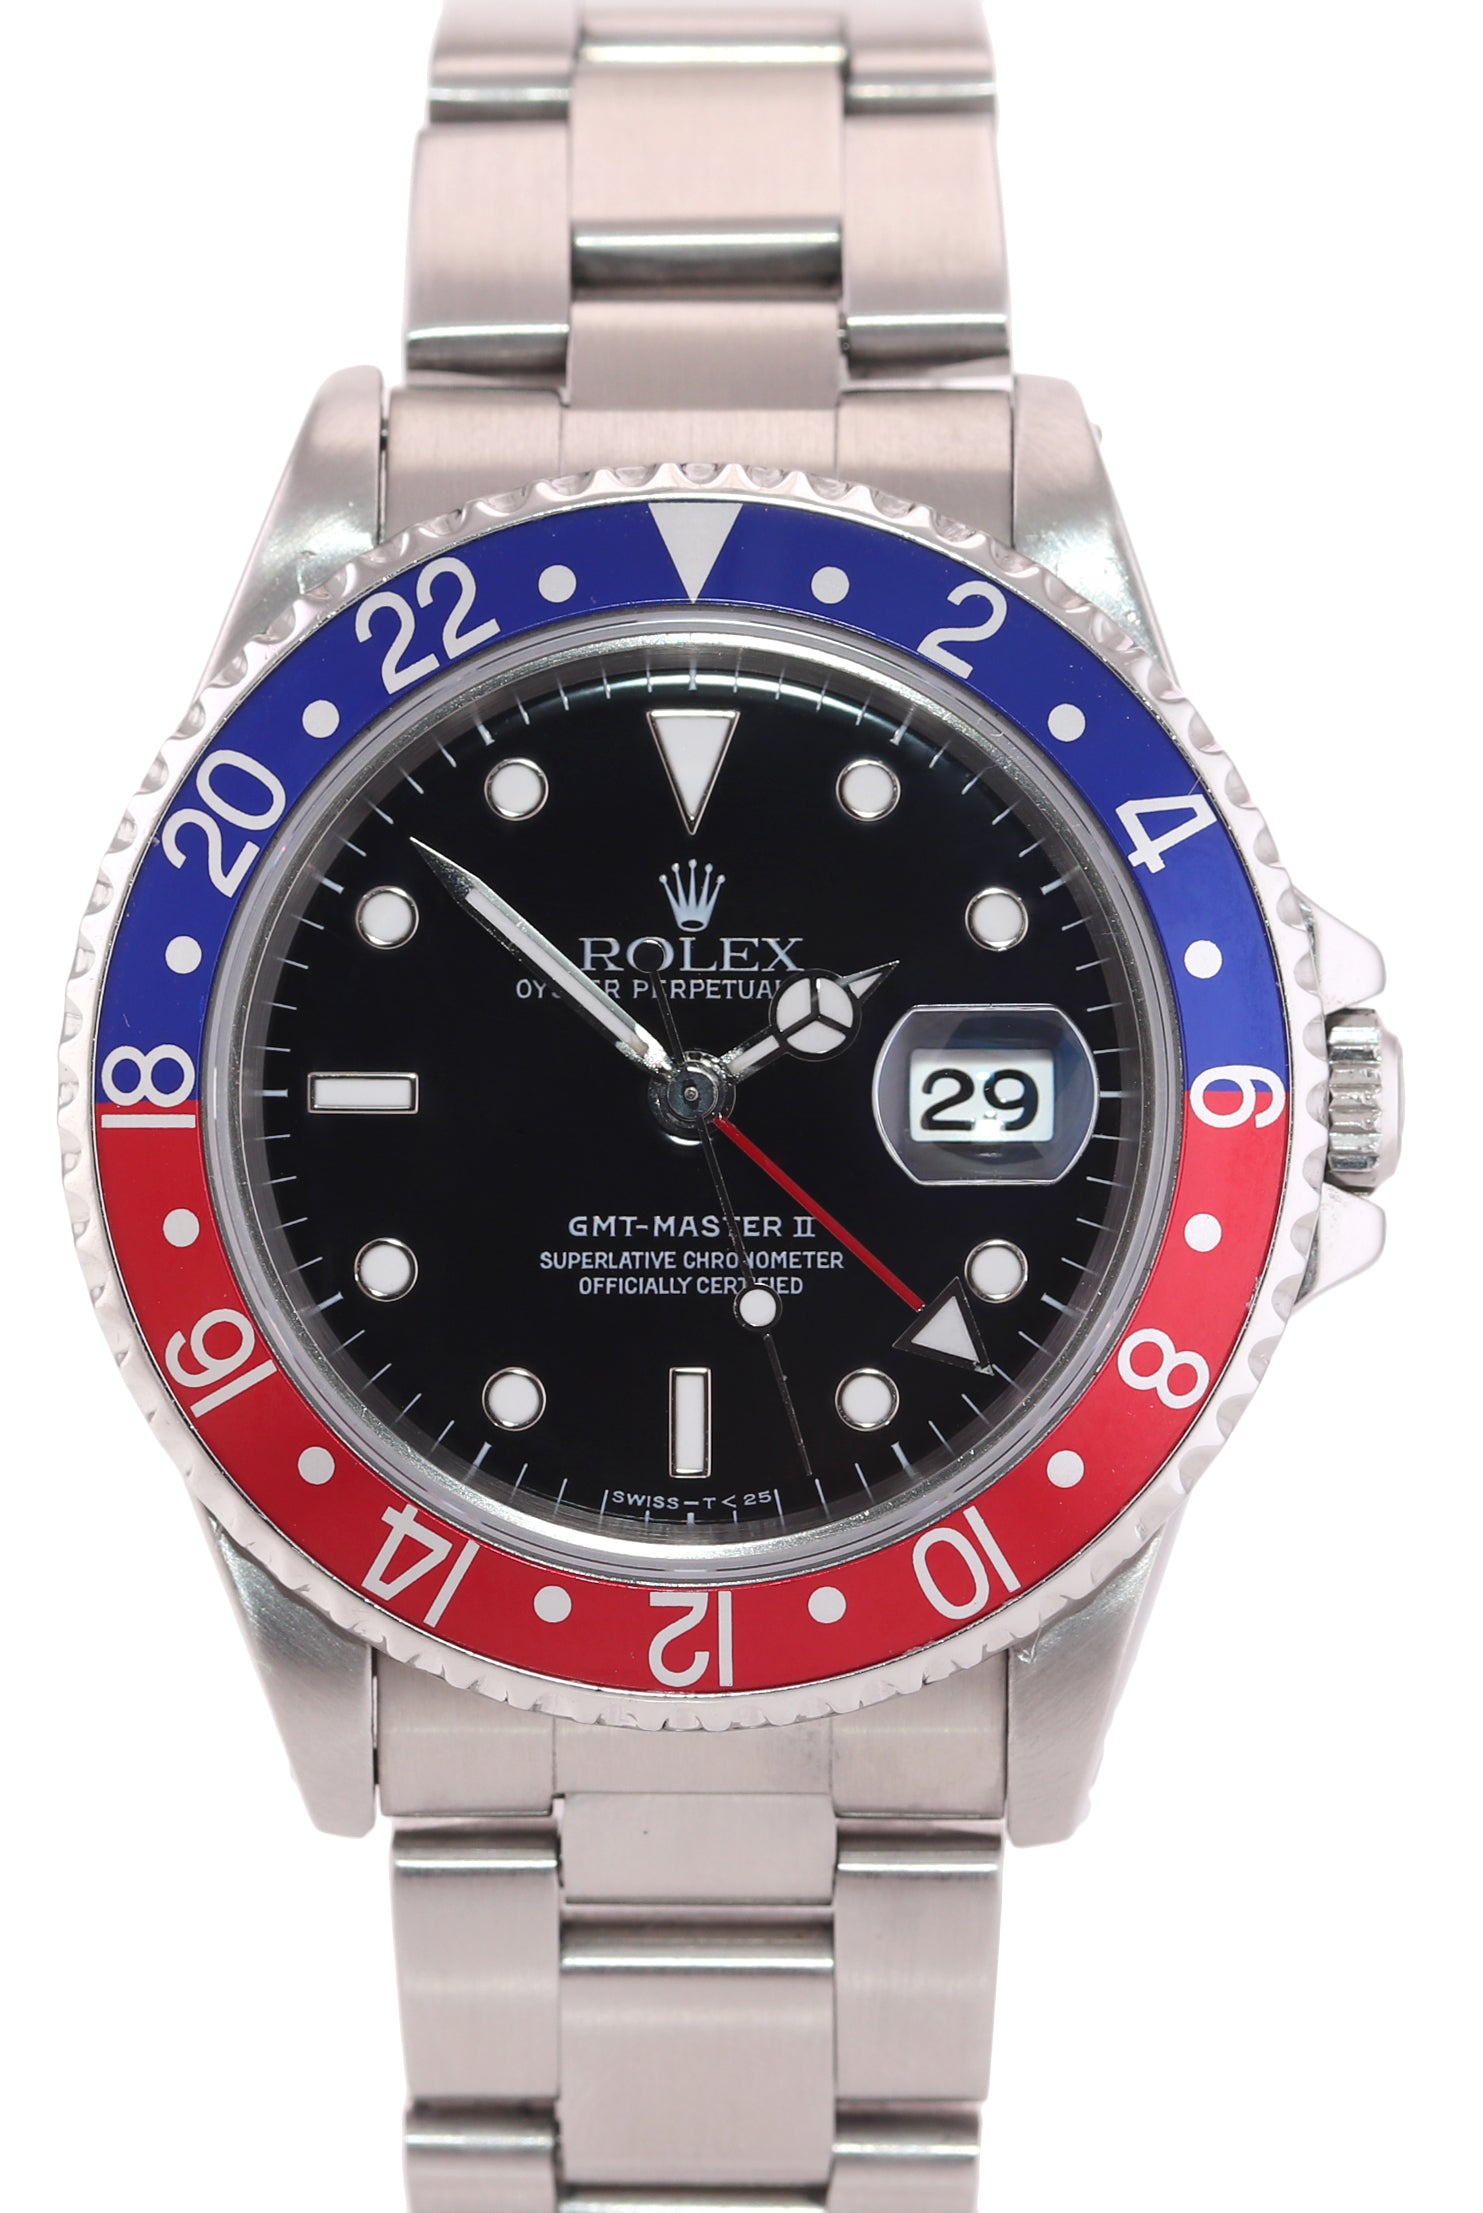 PAPERS Rolex GMT-Master TRITIUM Pepsi Blue Red Steel 40mm 16710 Watch Box